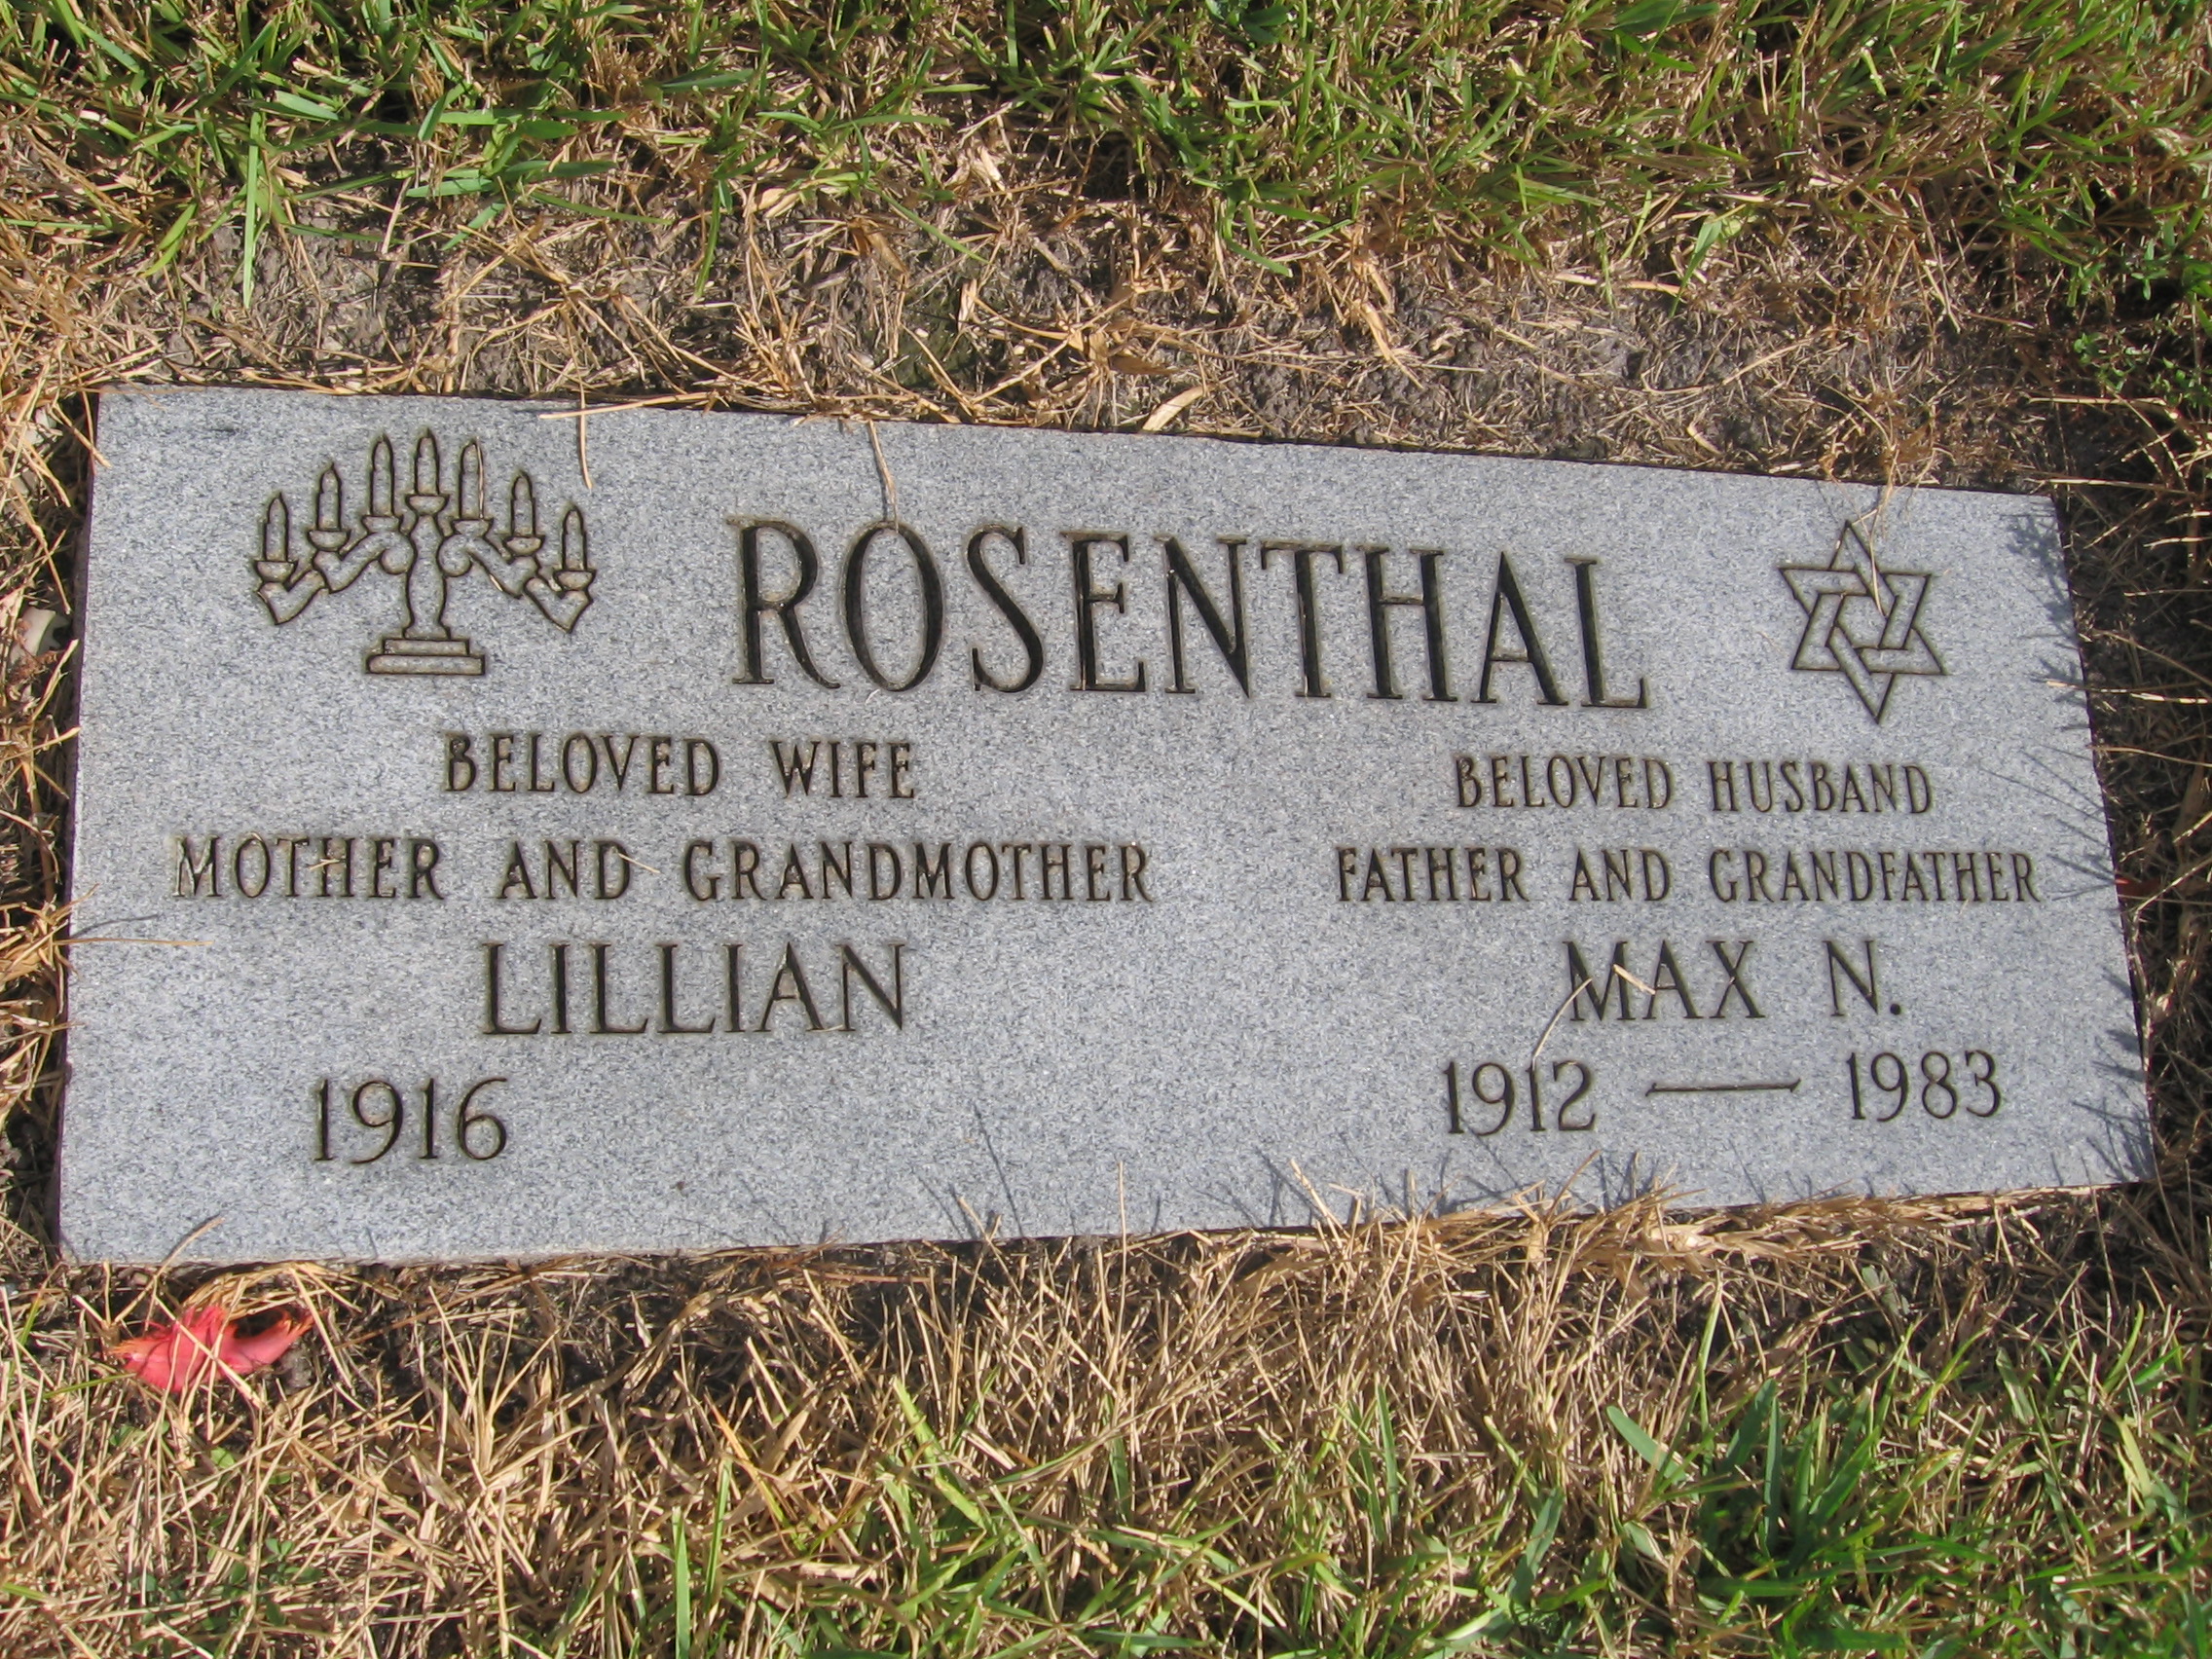 Lillian Rosenthal